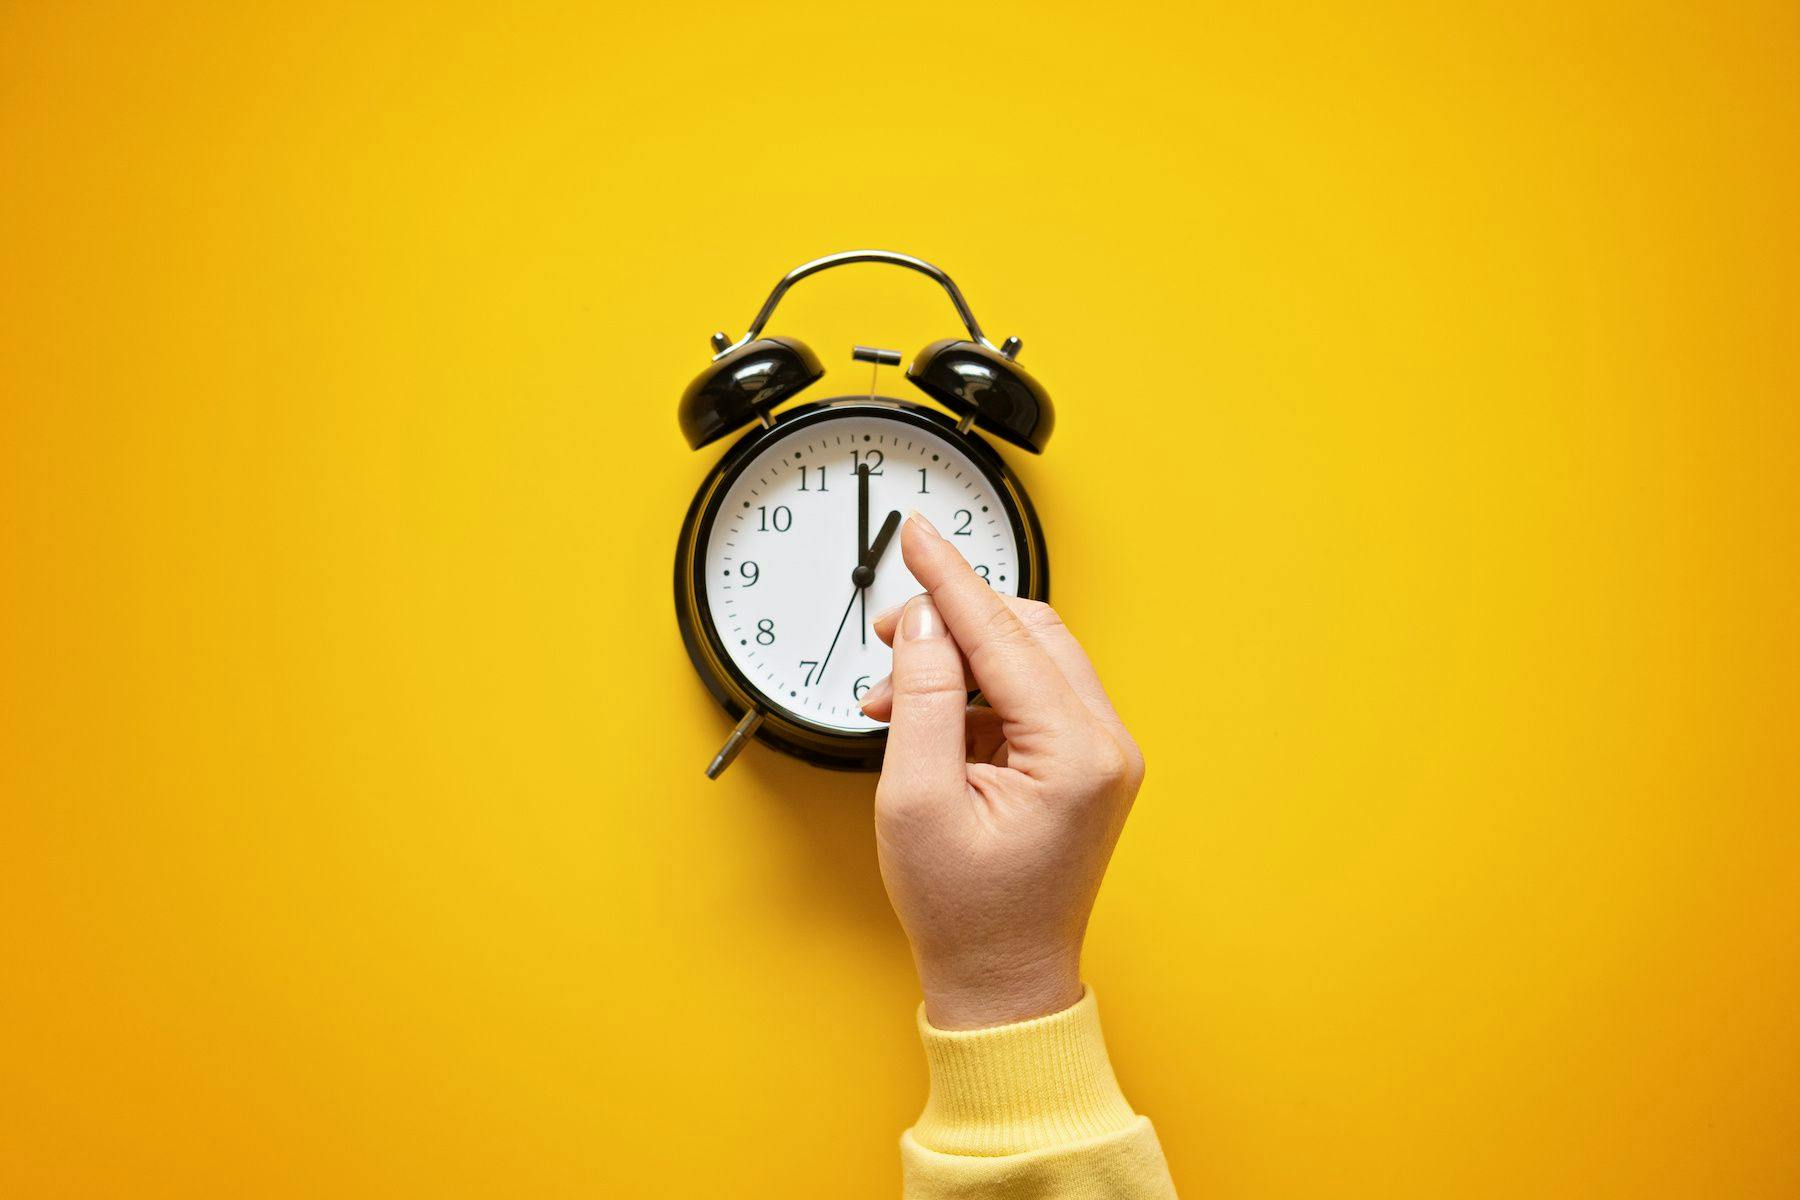 Debates on discontinuing daylight saving time shifts persist as permanent legislation still fails to pass. | image credit: irissca - stock.adobe.com